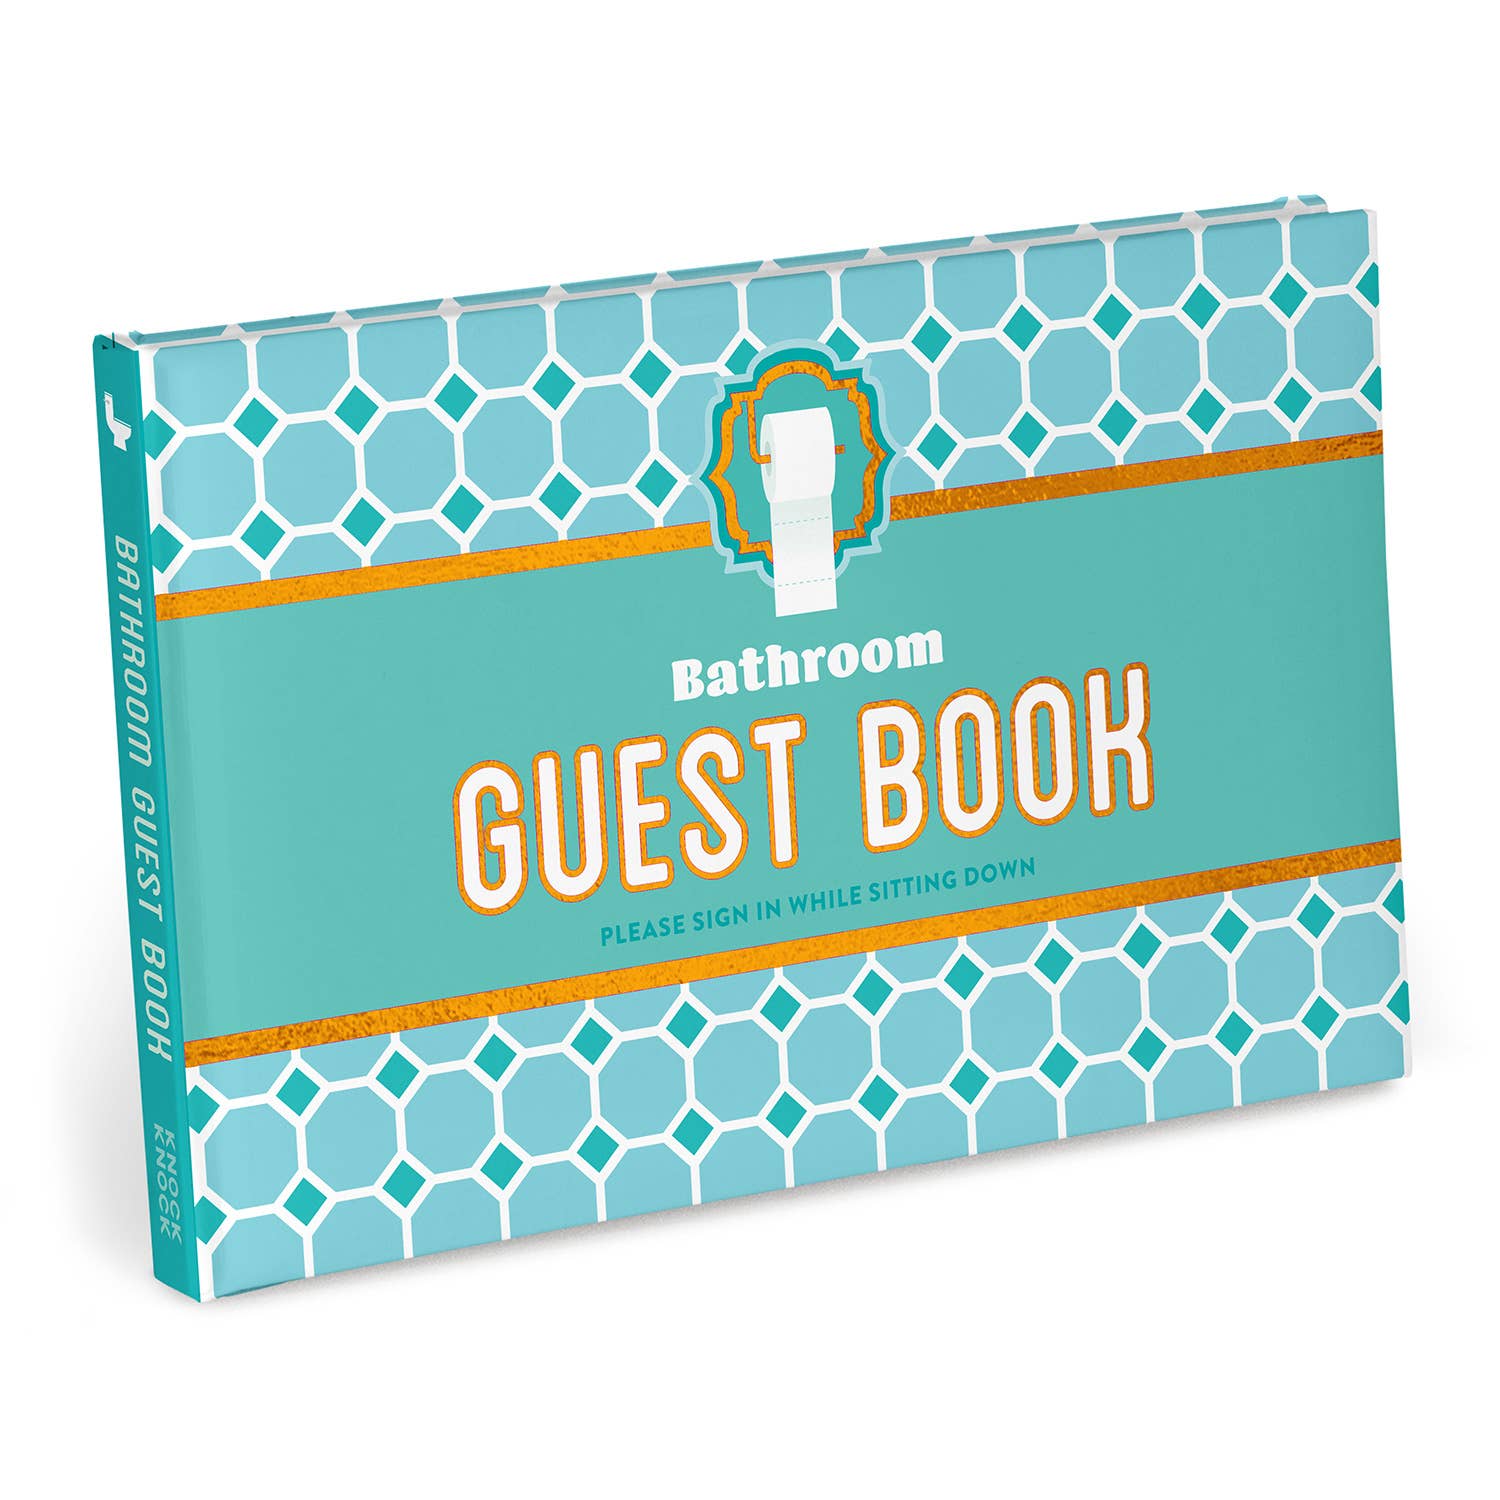 Knock Knock - Knock Knock Bathroom Guestbook (Second Edition)